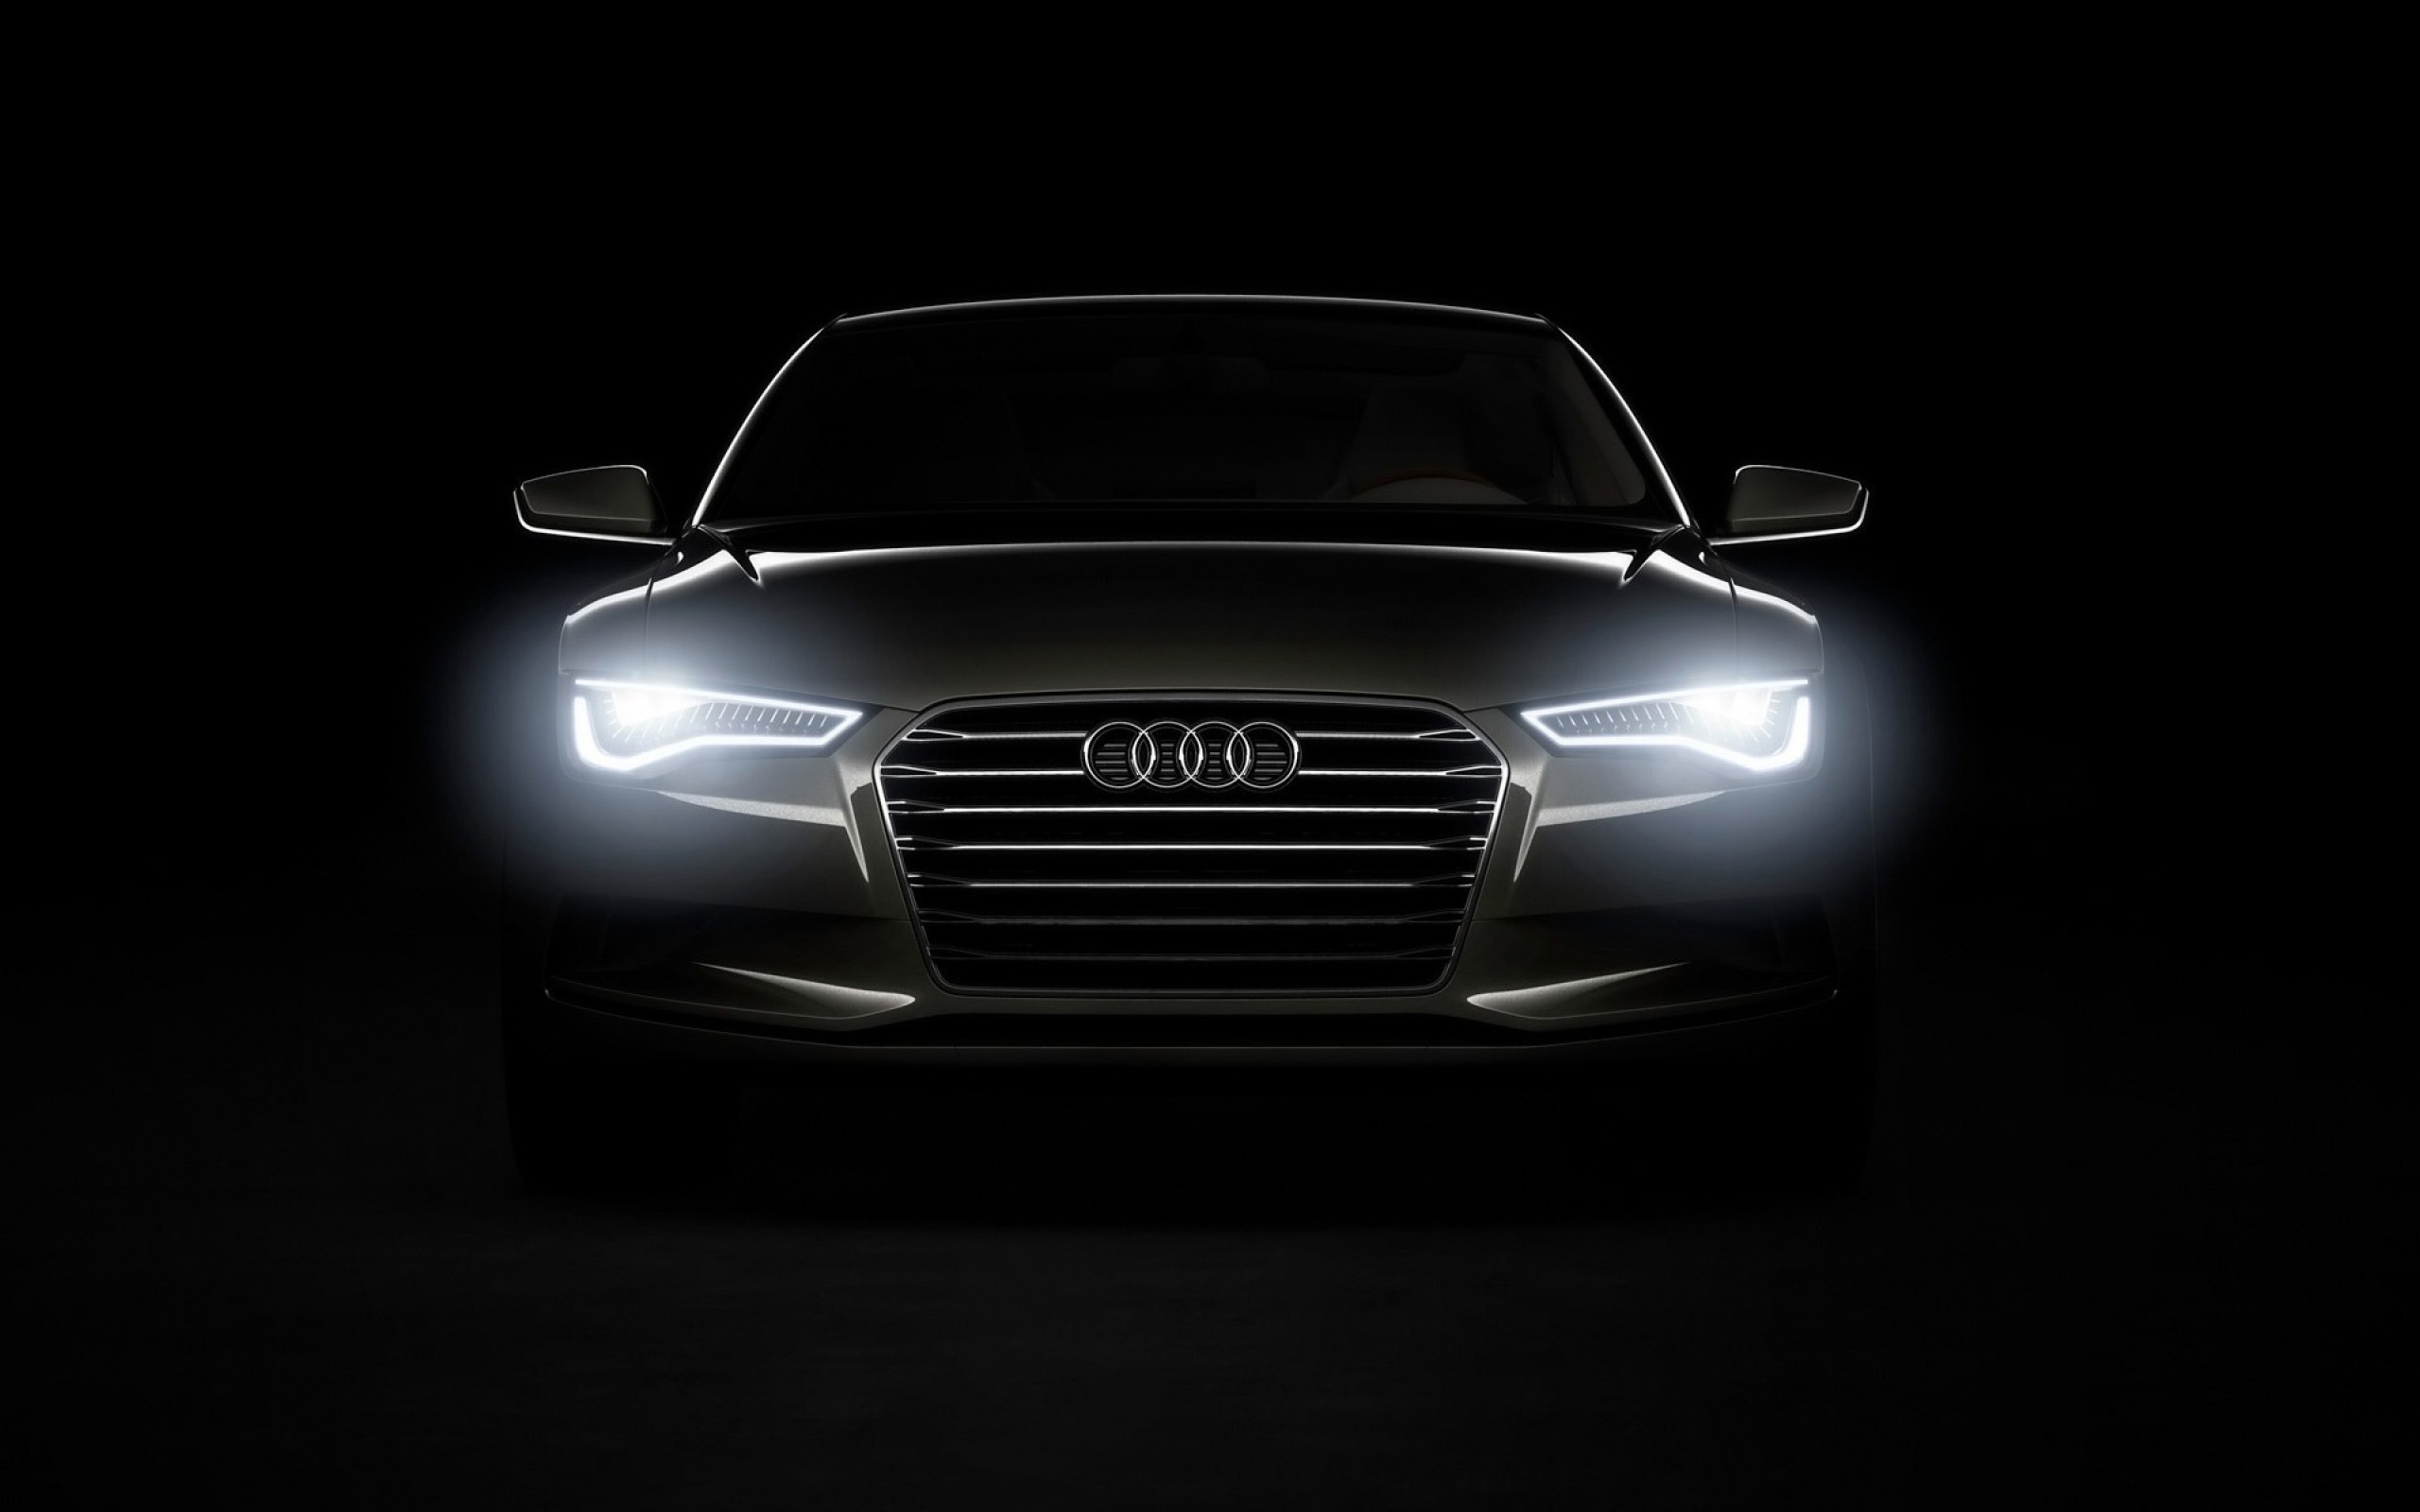 2560x1600 Audi-Cars-Wallpapers-HD-26.jpg (2560Ã1600) | Cool cars | Pinterest | Audi,  Car wallpapers and Custom cars